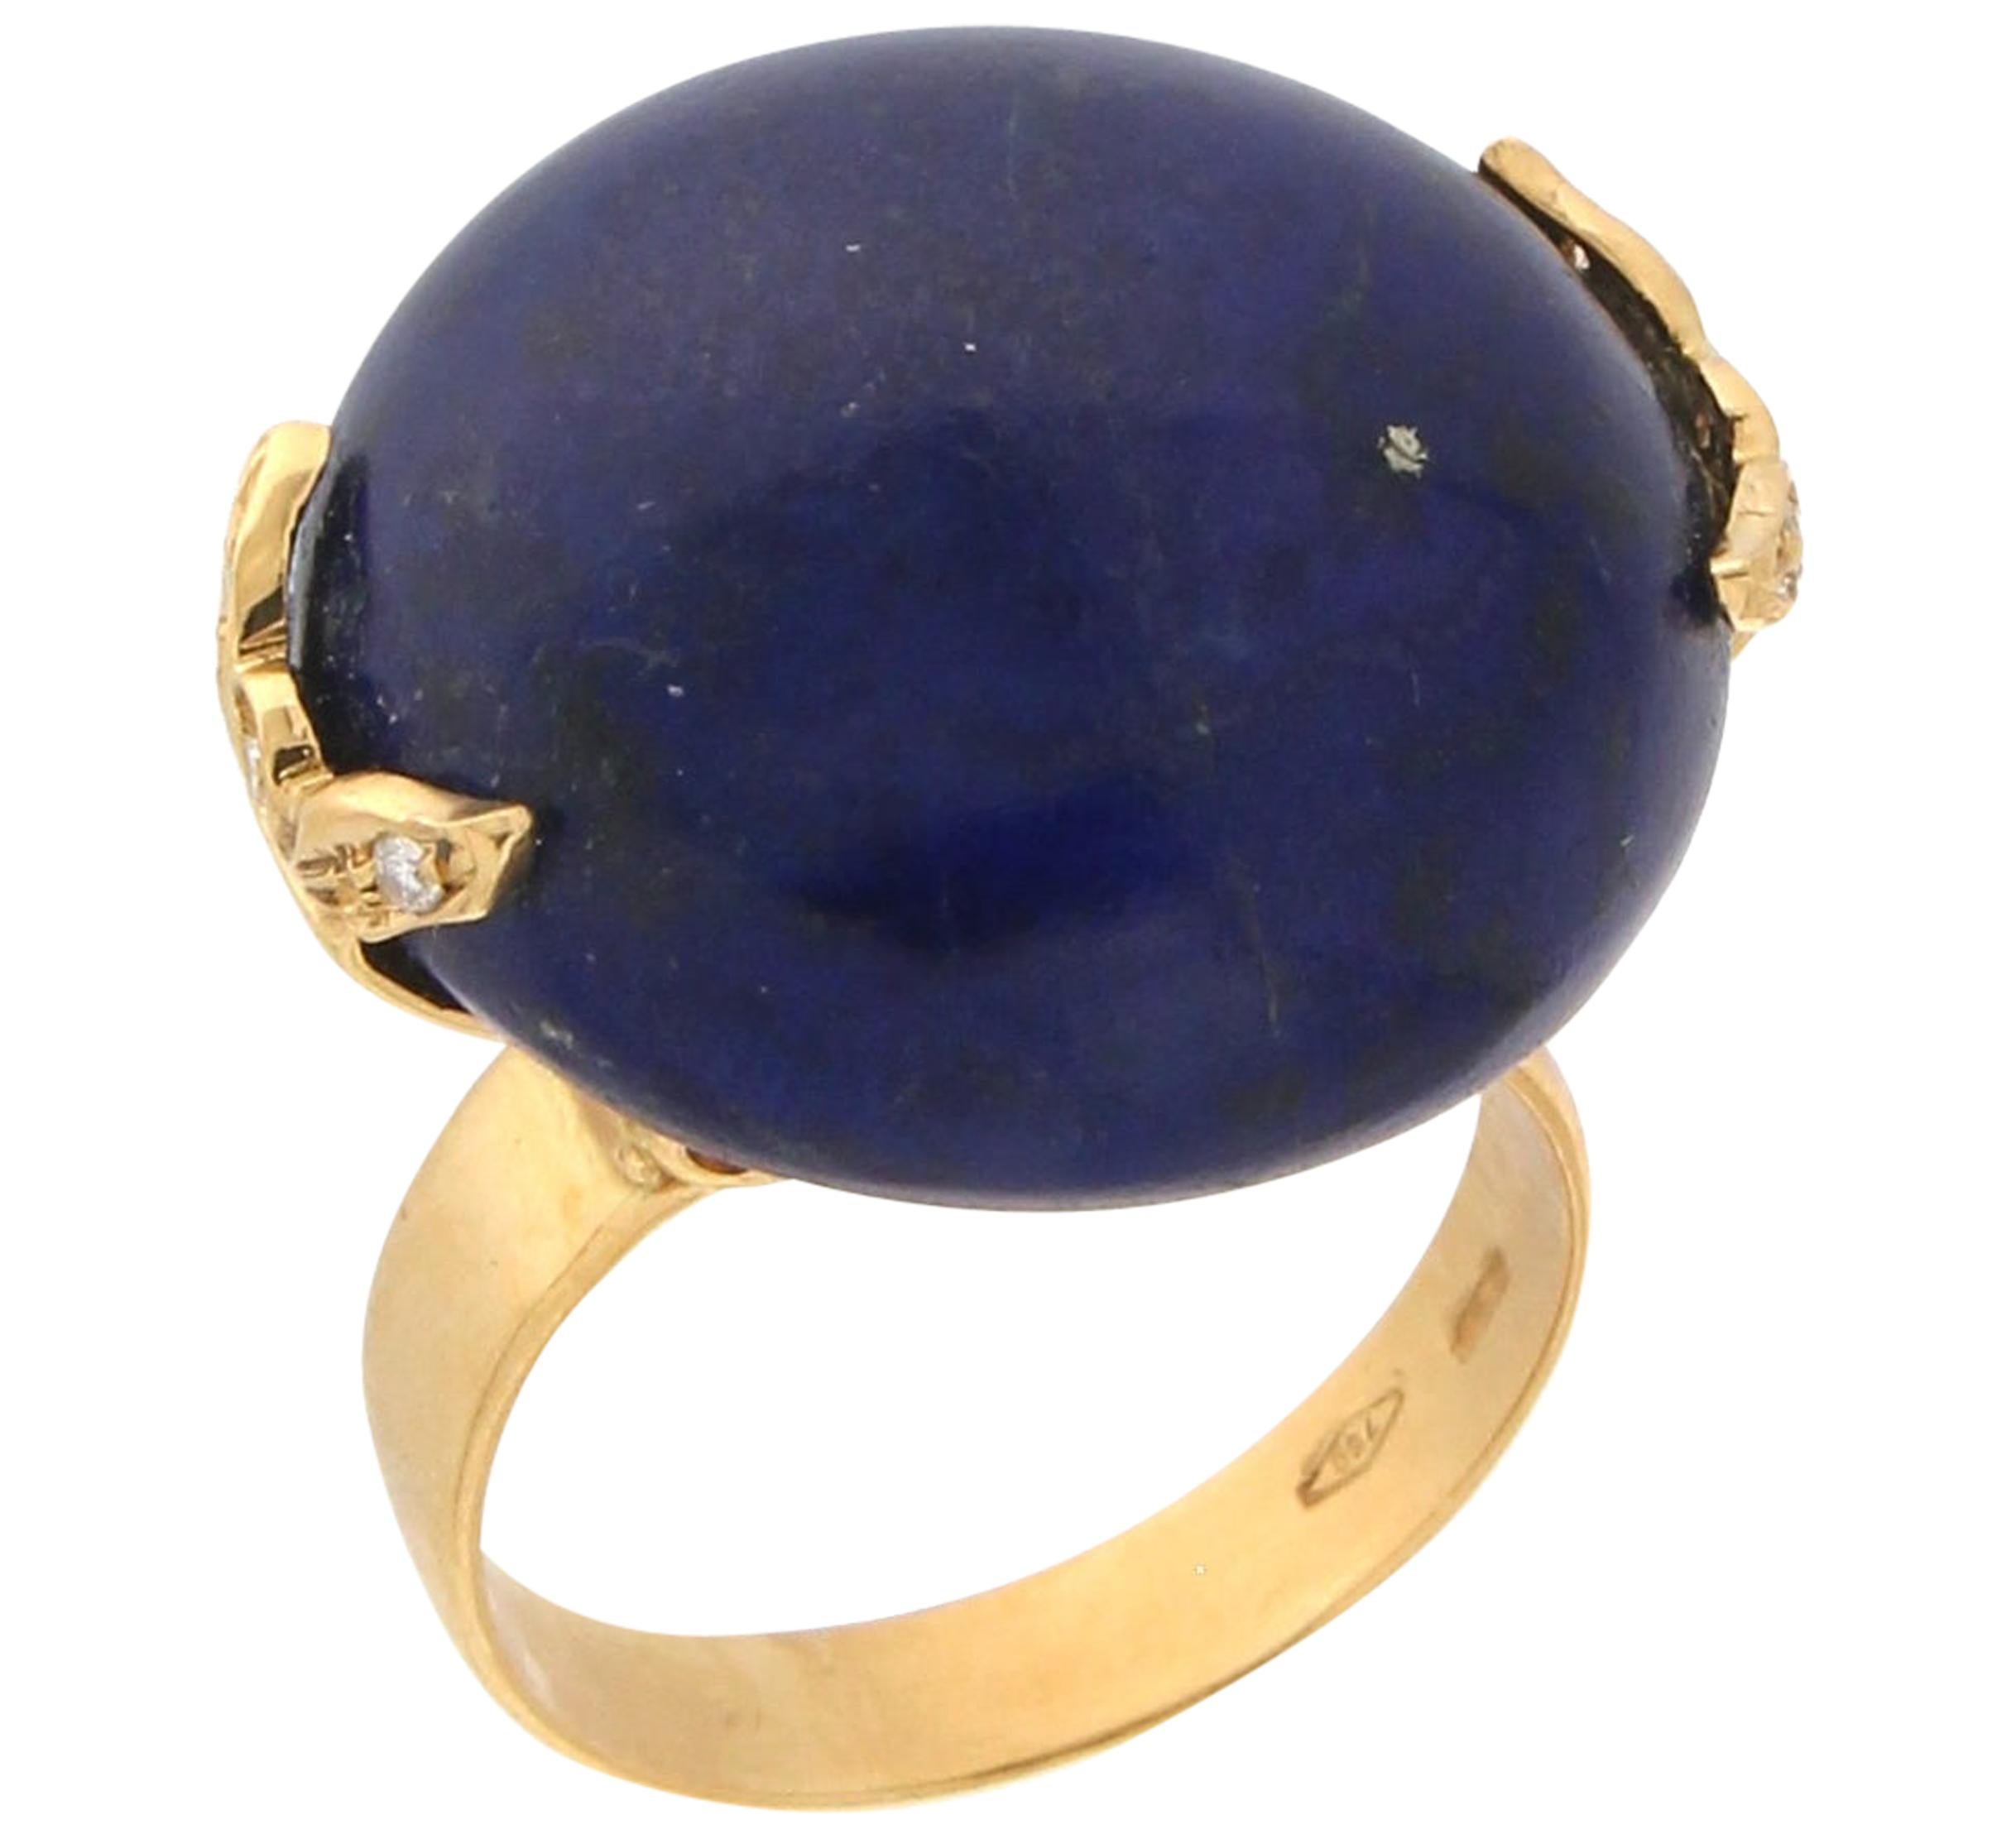 Handcraft Lapis Lazuli 18 Karat Yellow Gold Diamonds Cocktail Ring